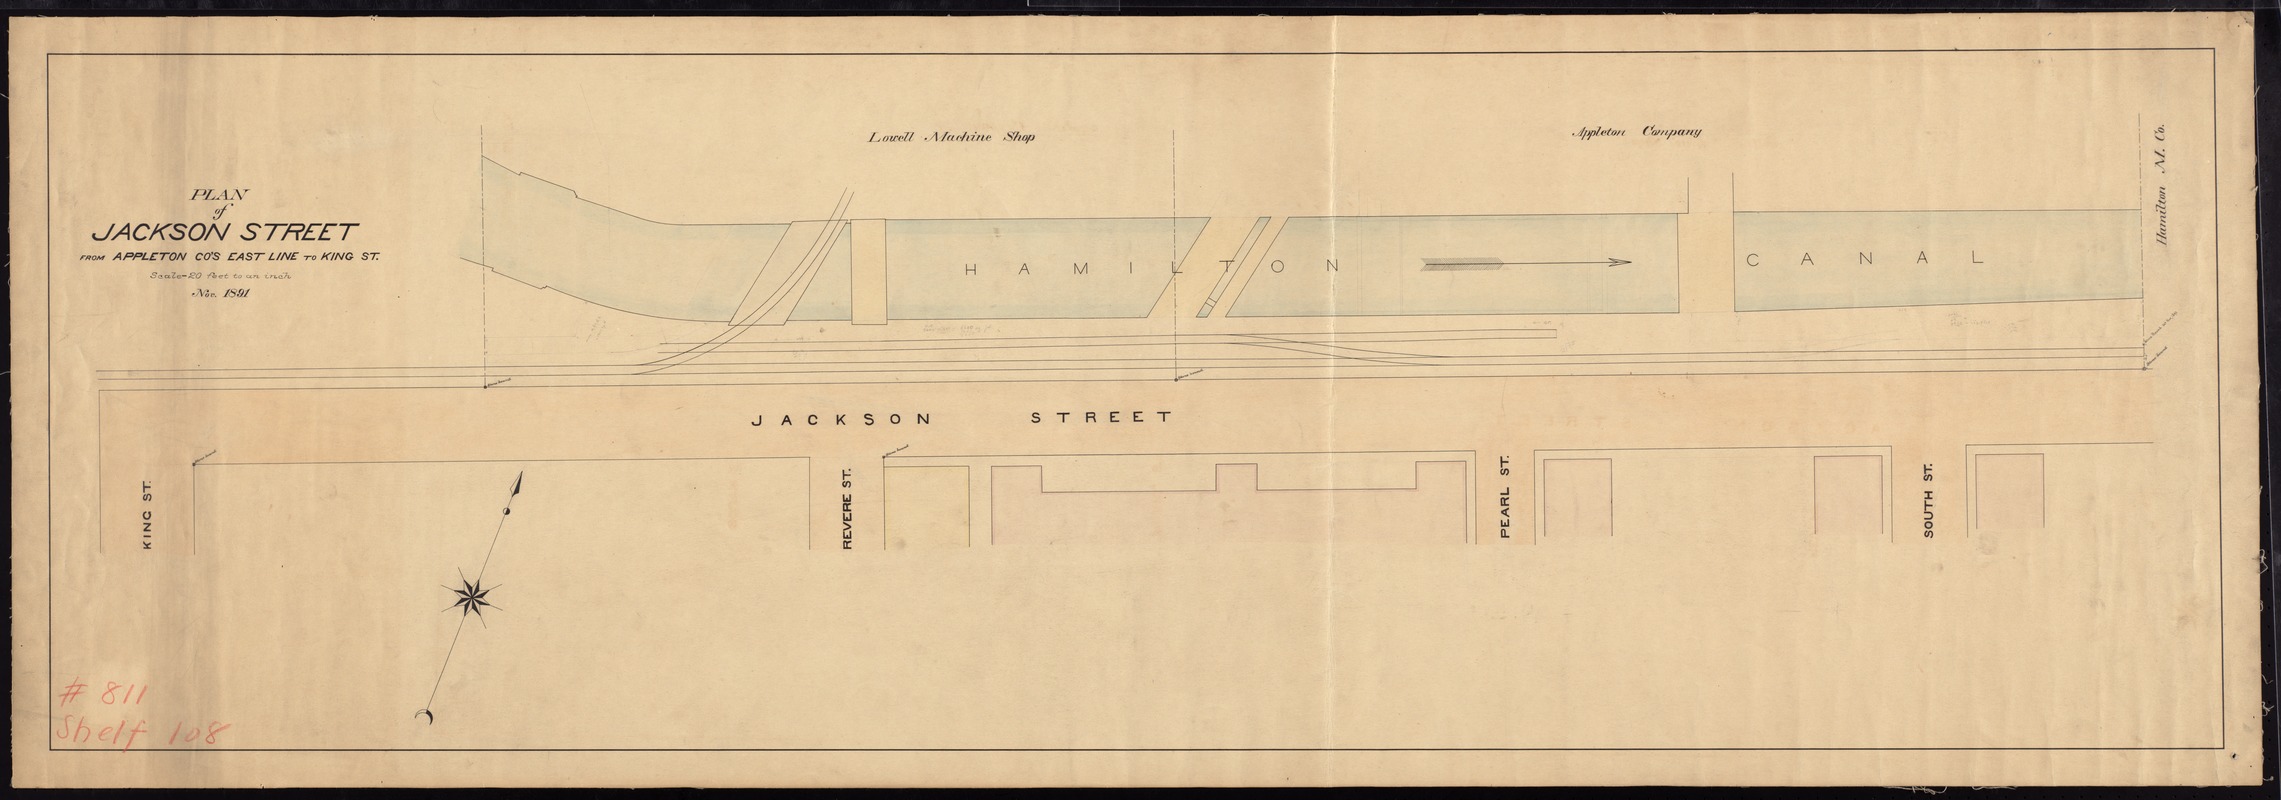 Map of jackson street